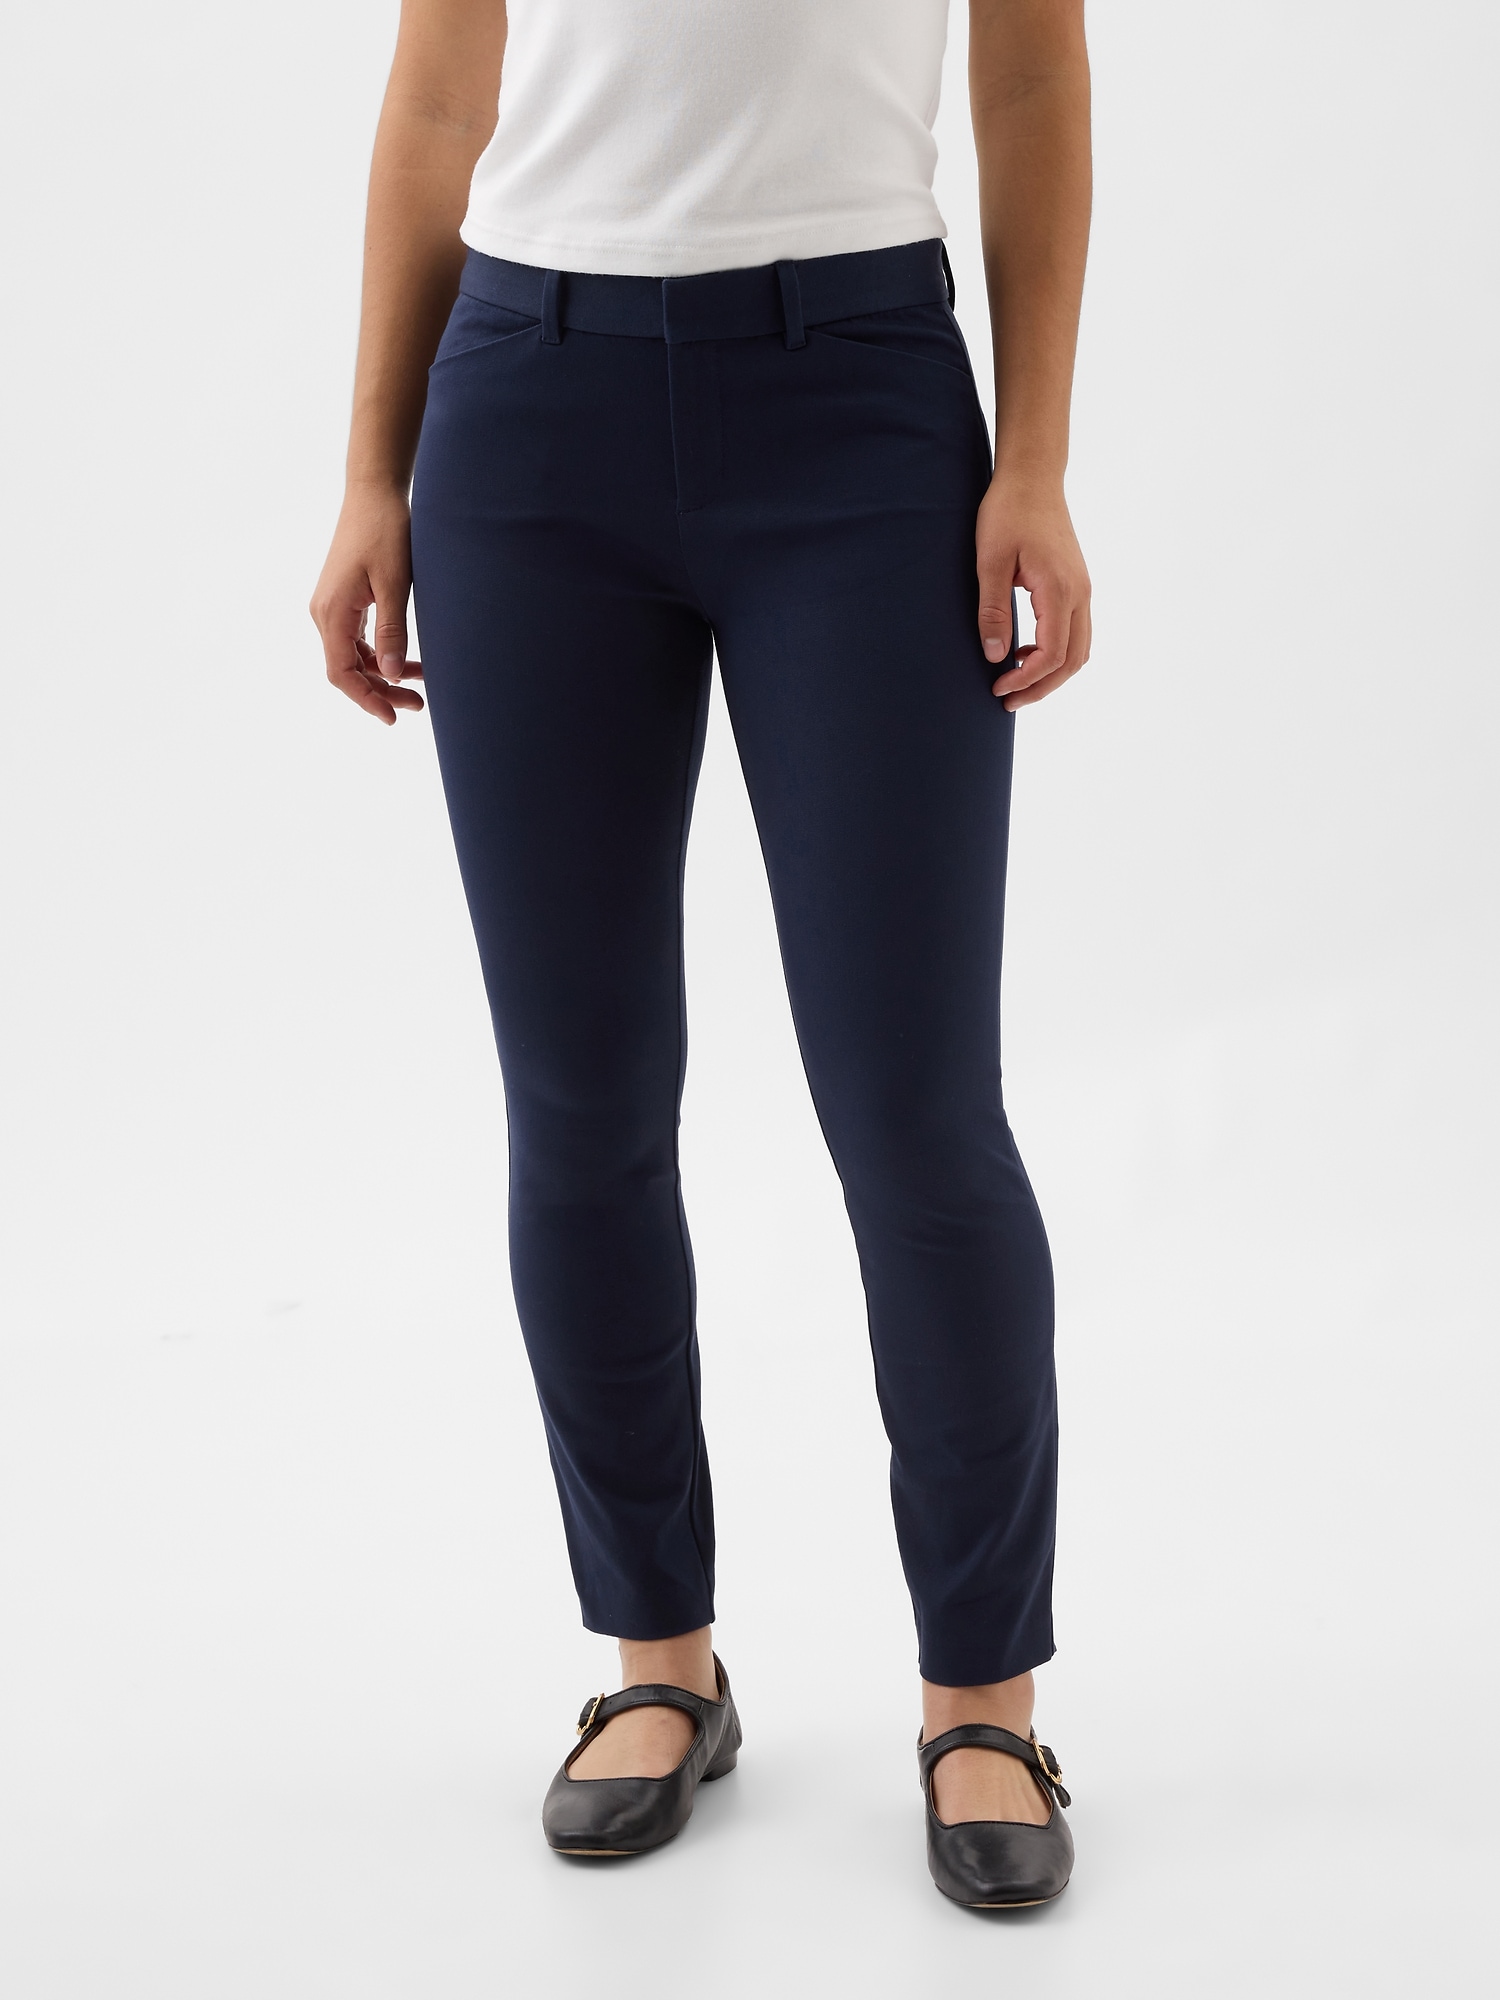 GAP Women's Comfortable Cotton Stretch Skinny Pant (Black, 10)